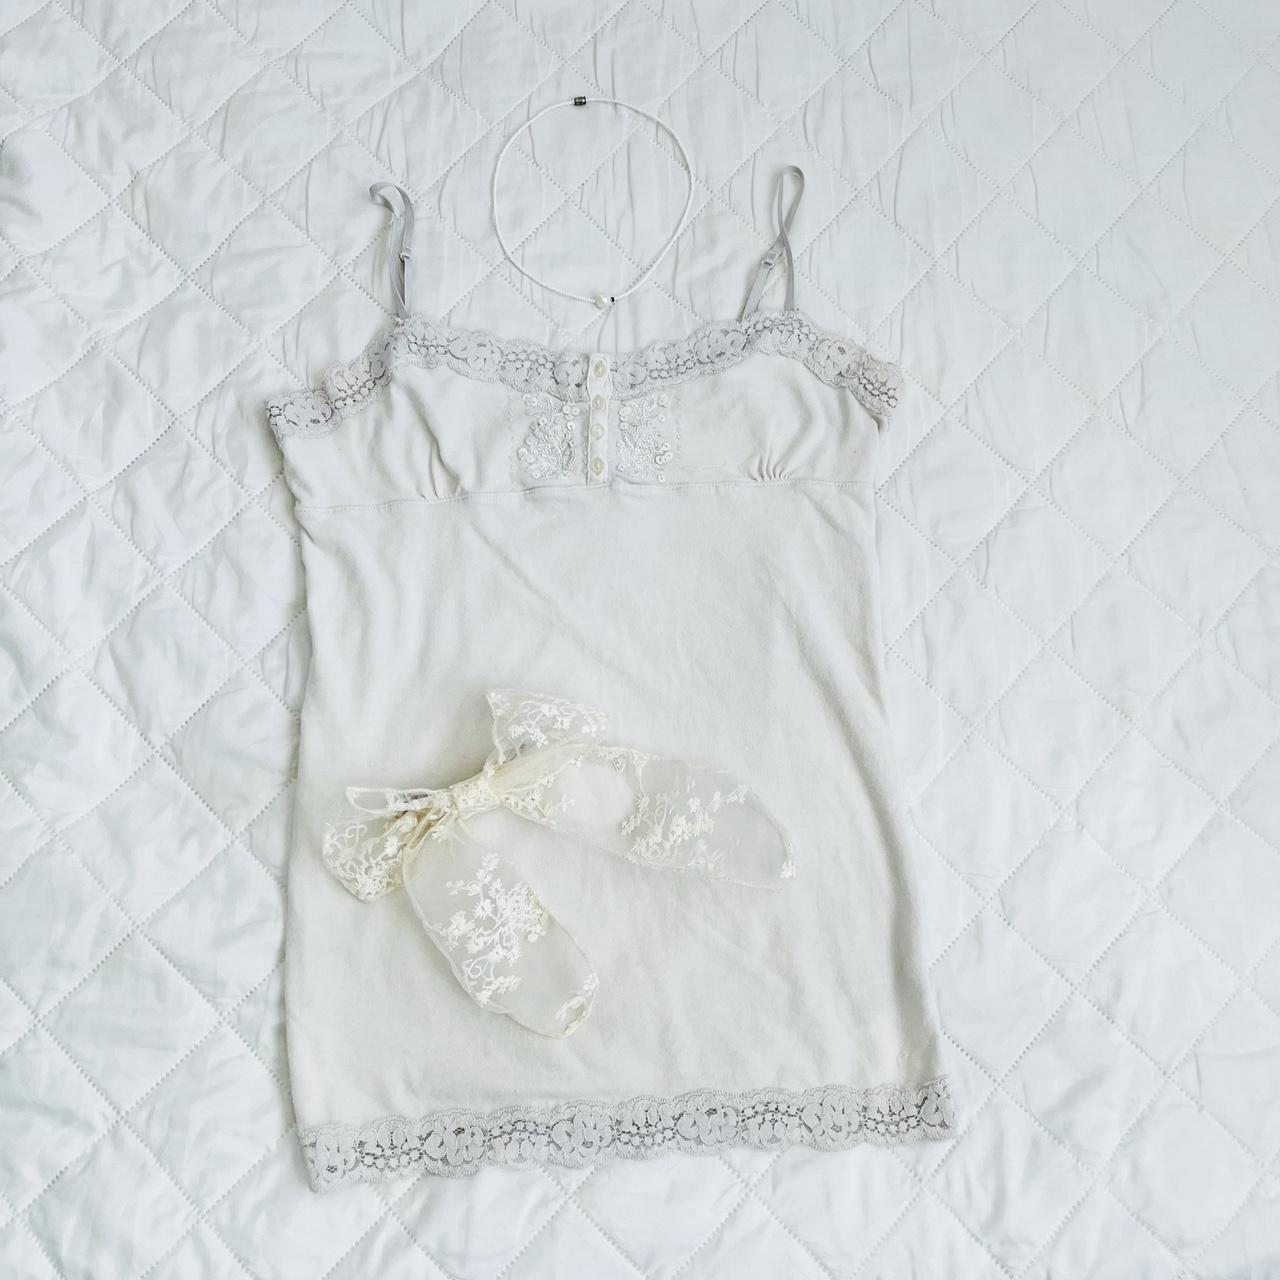 Dreamy white lace camisole top